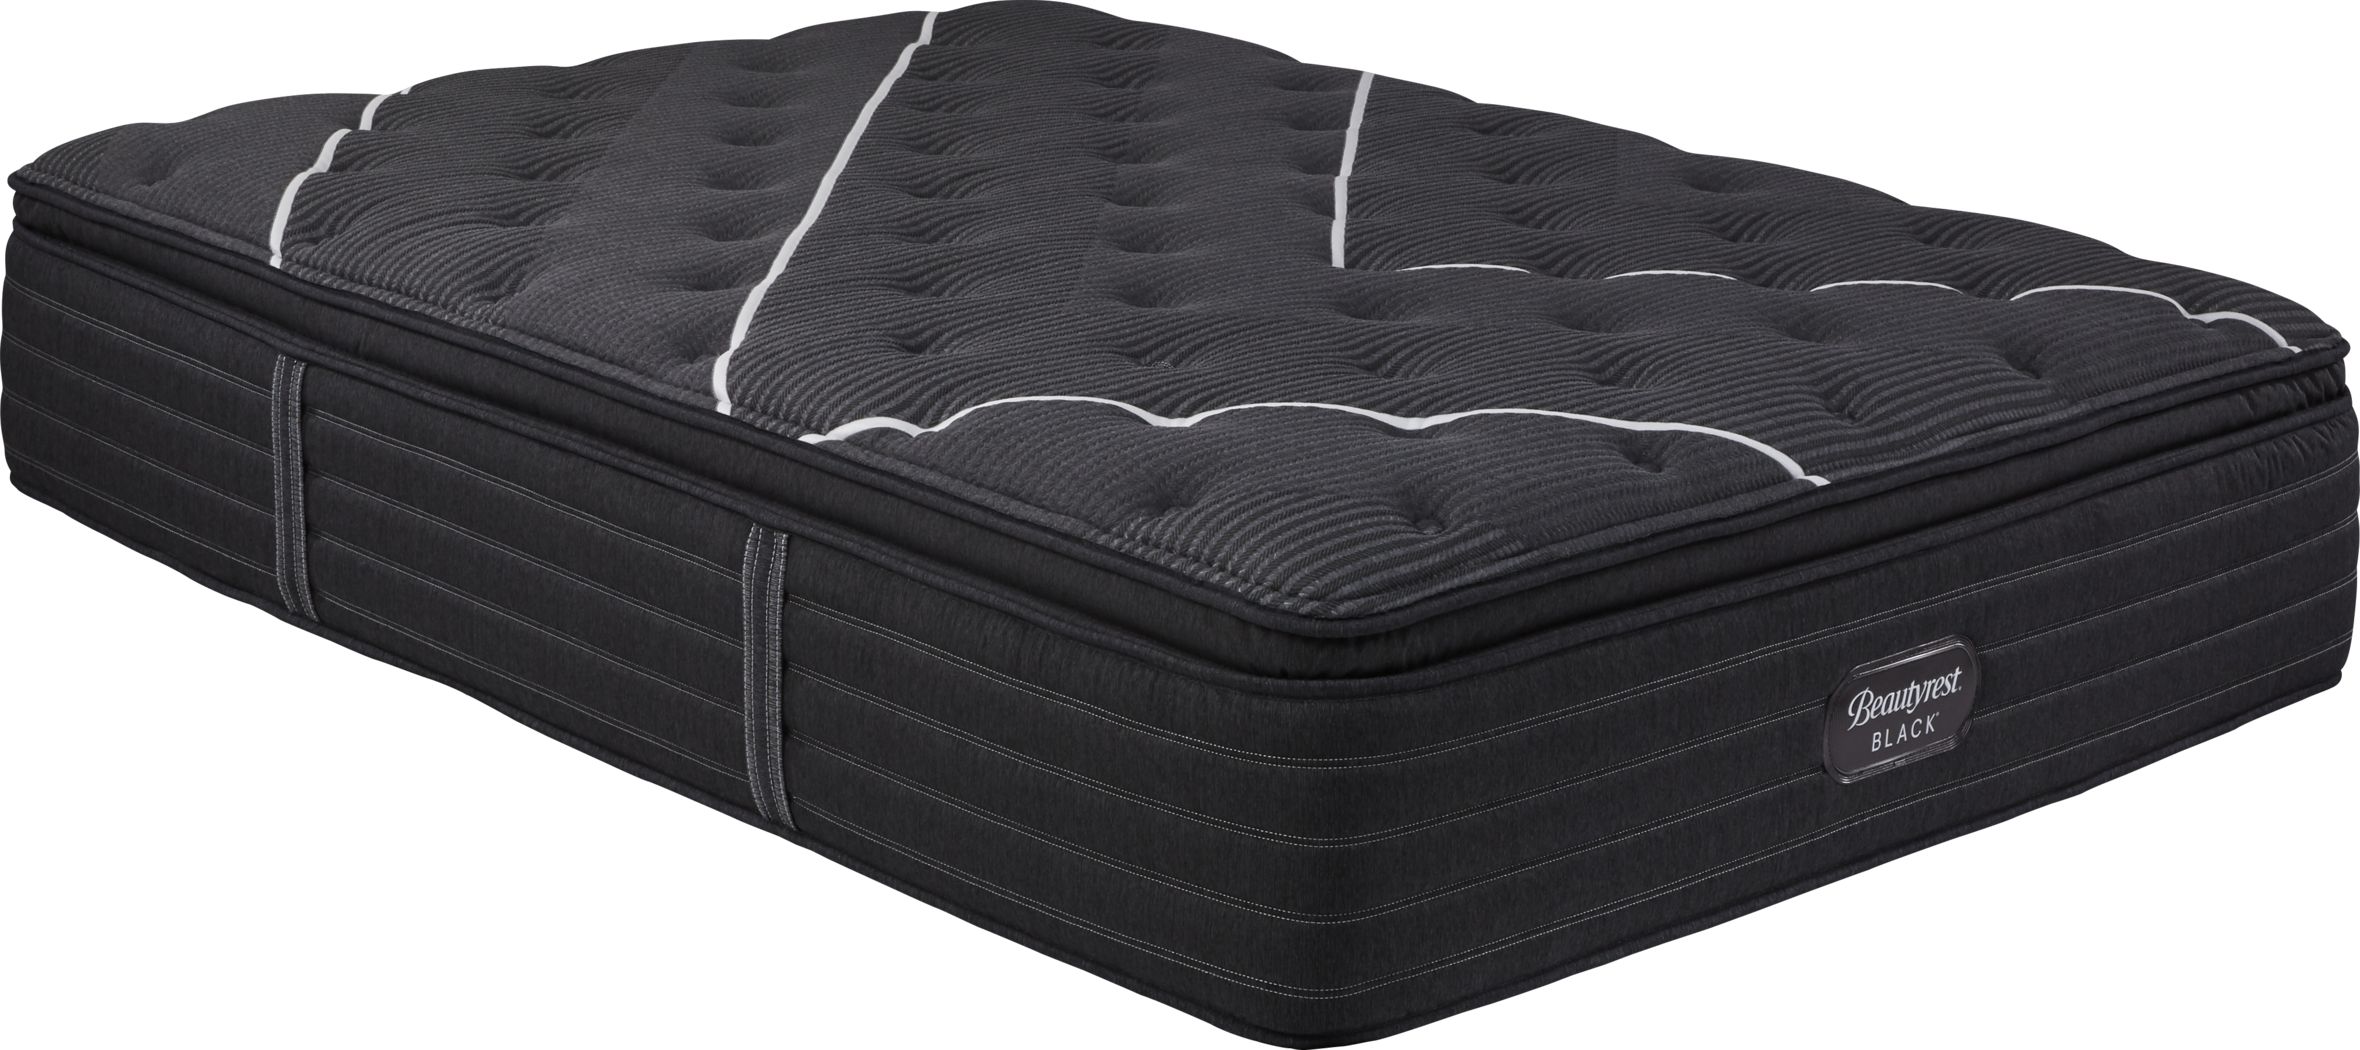 beatyrest black king mattresses